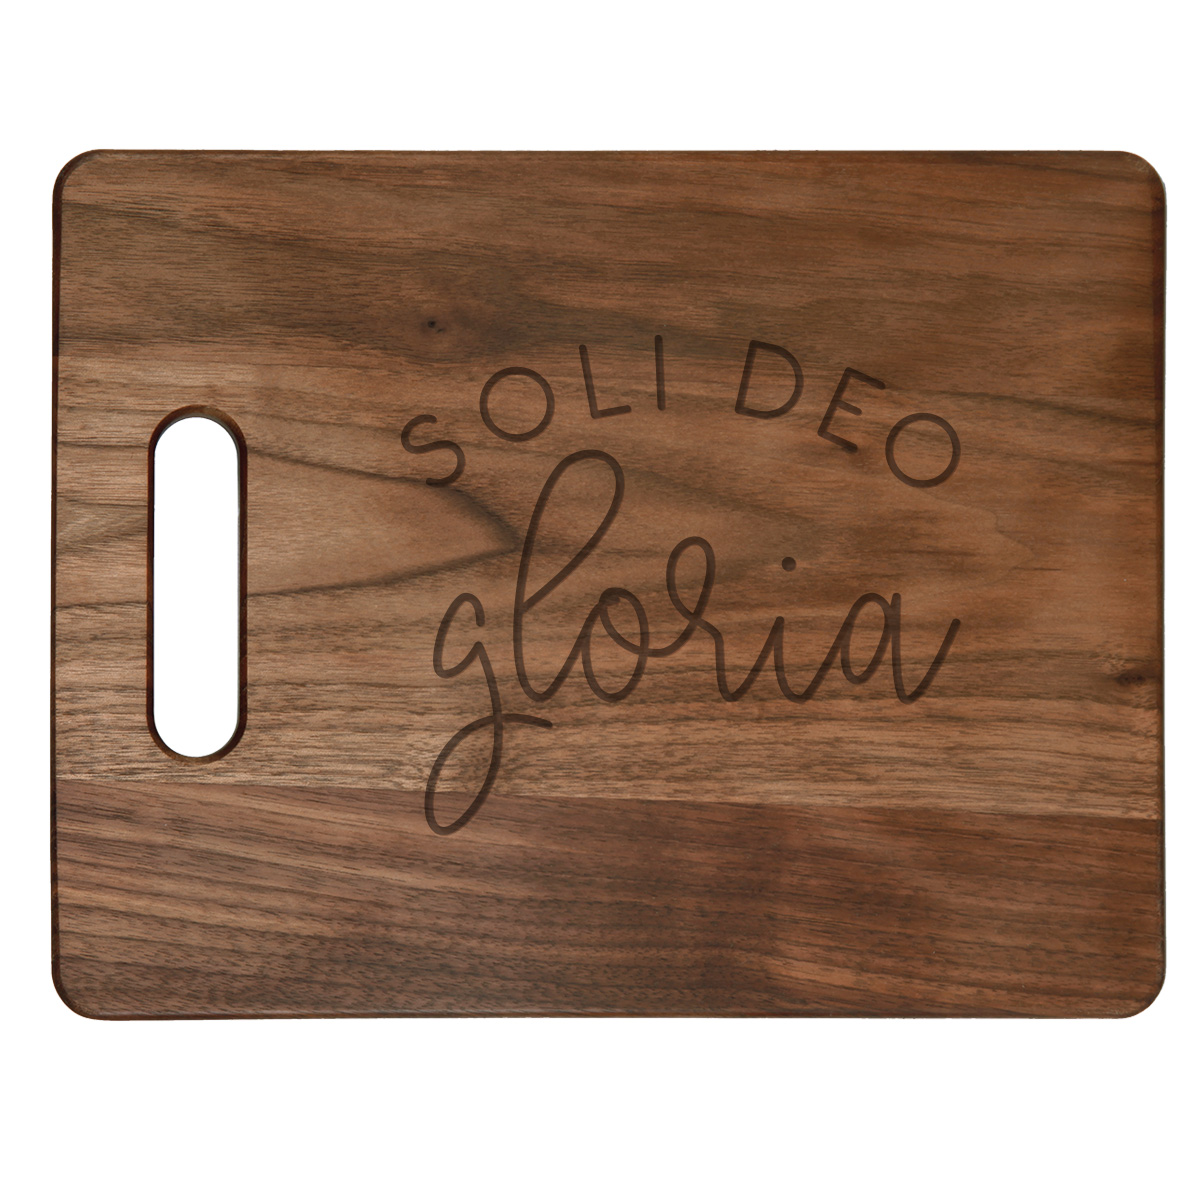 Soli Deo Gloria Monoline Cutting Board